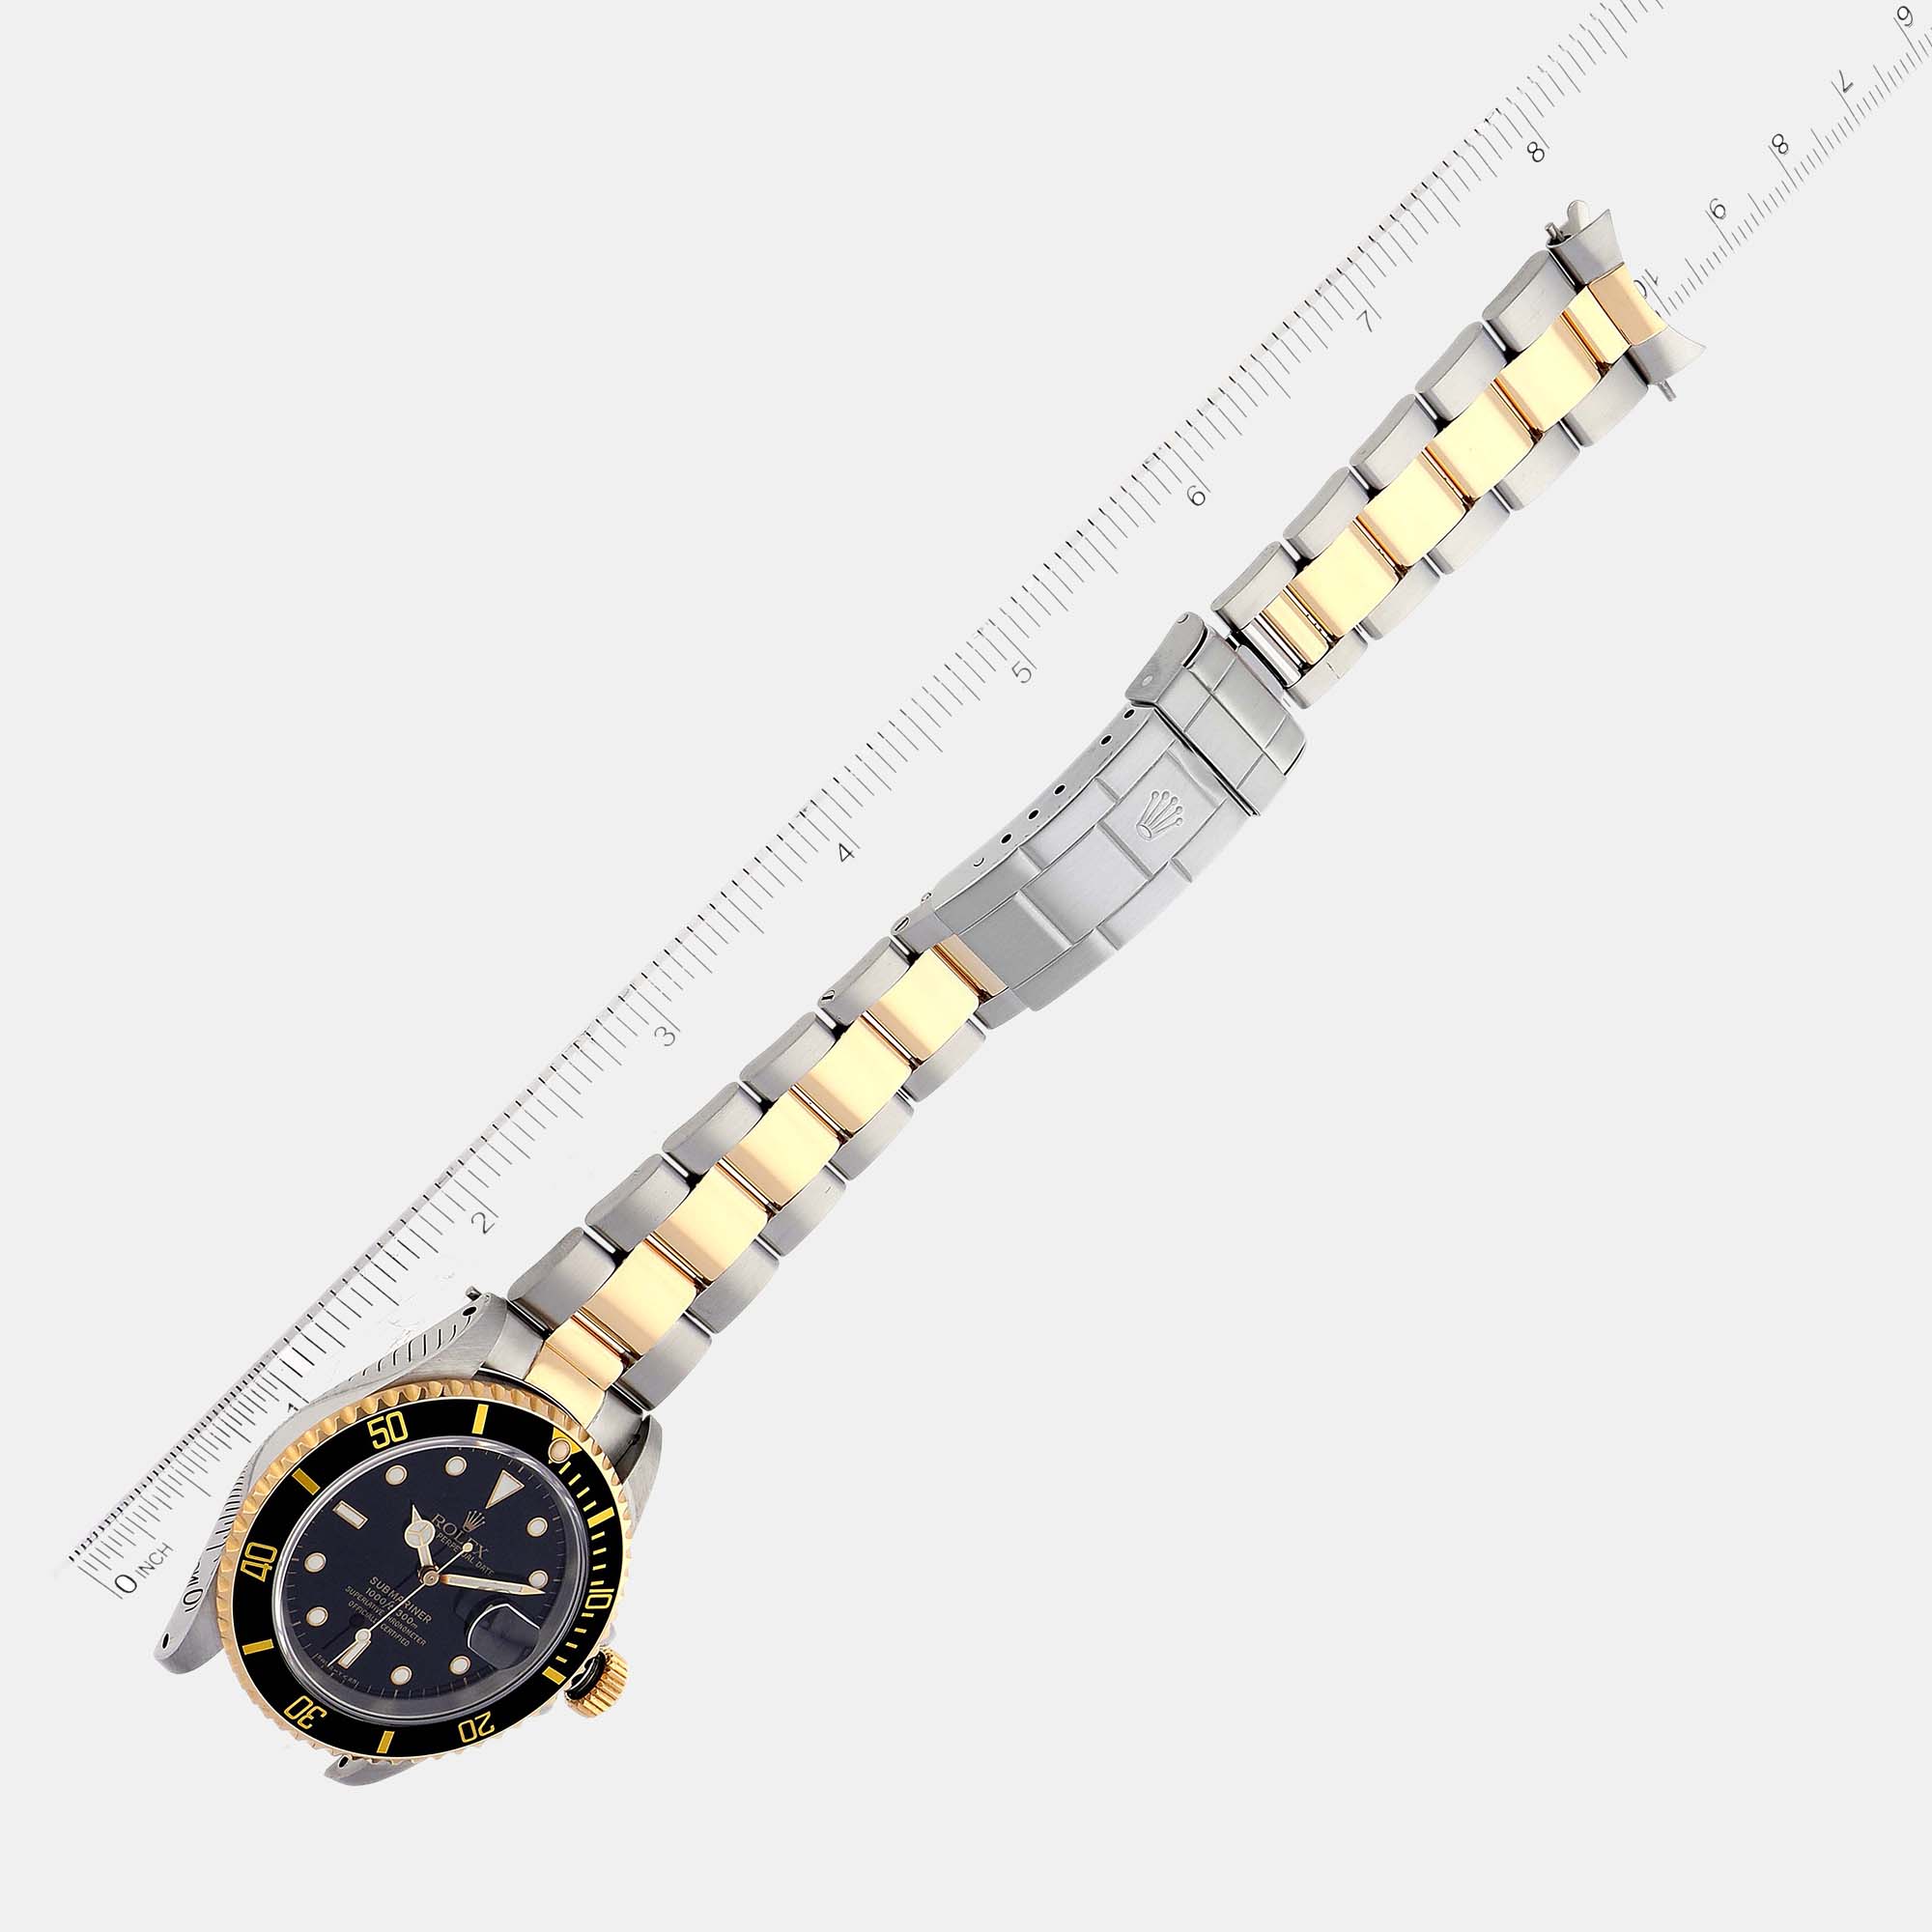 Rolex Submariner Steel Yellow Gold Black Dial Men's Watch 16613 40 Mm